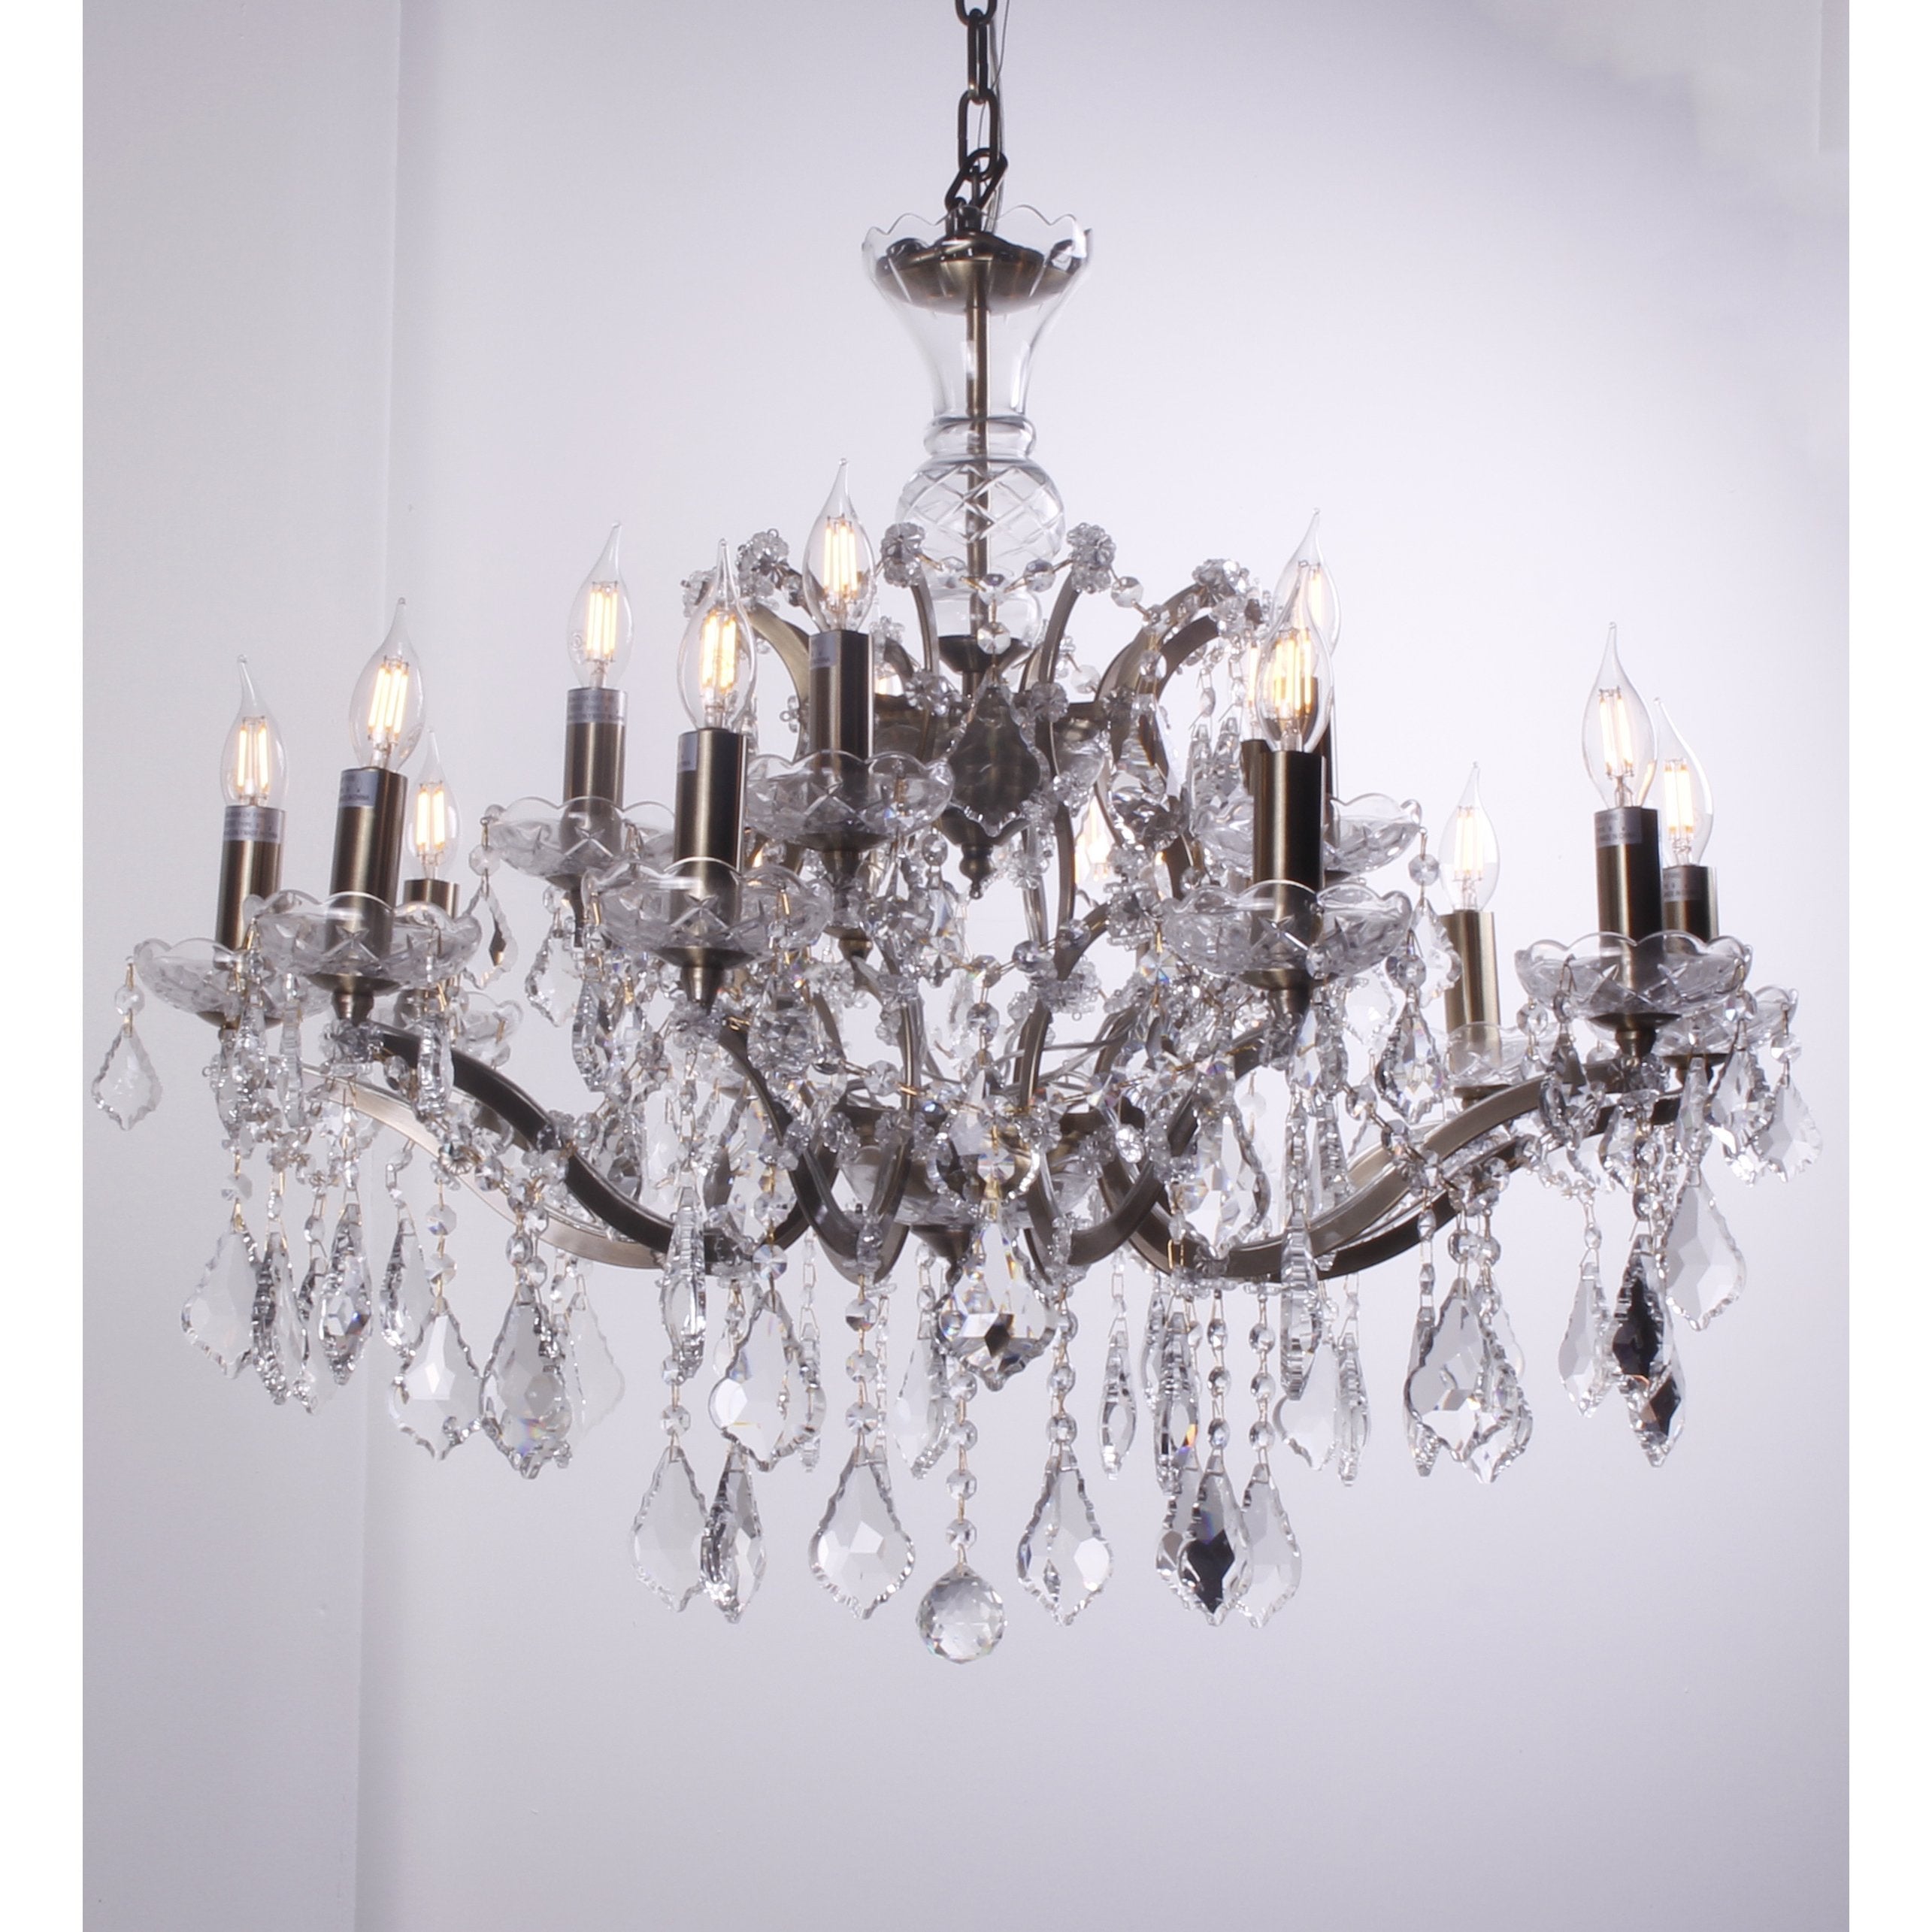 15 Light Rococo Maria Theresa Crystal Chandelier - Italian Concept - 